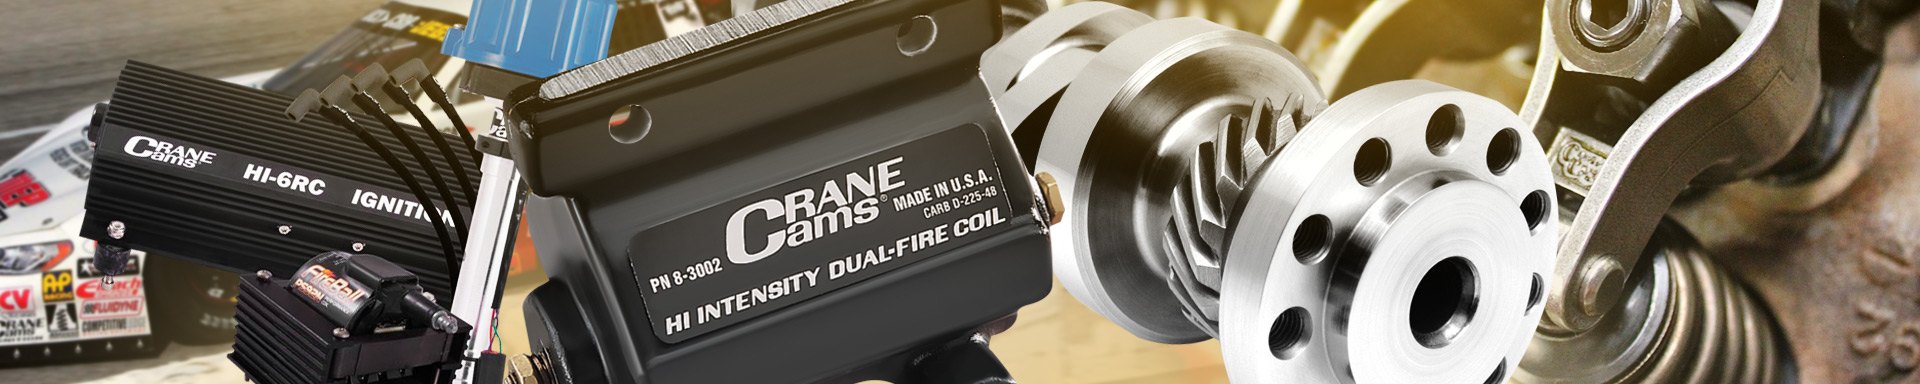 Crane Cams Oils, Fluids, Lubricants